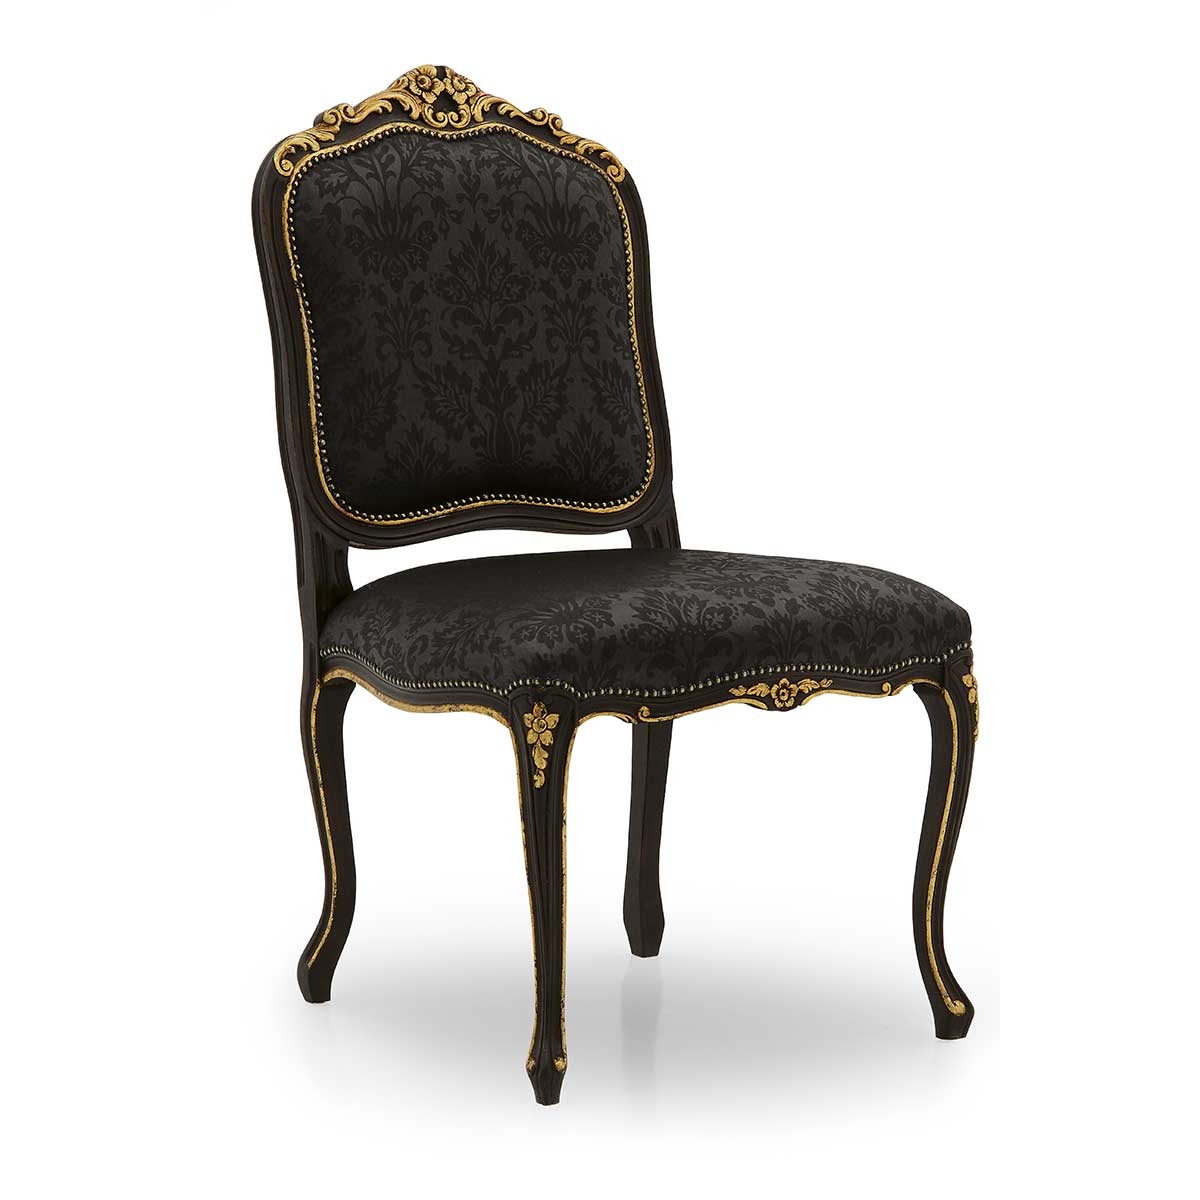 Black upholstered classic chair MONSIEUR by Sevensedie in baroque style